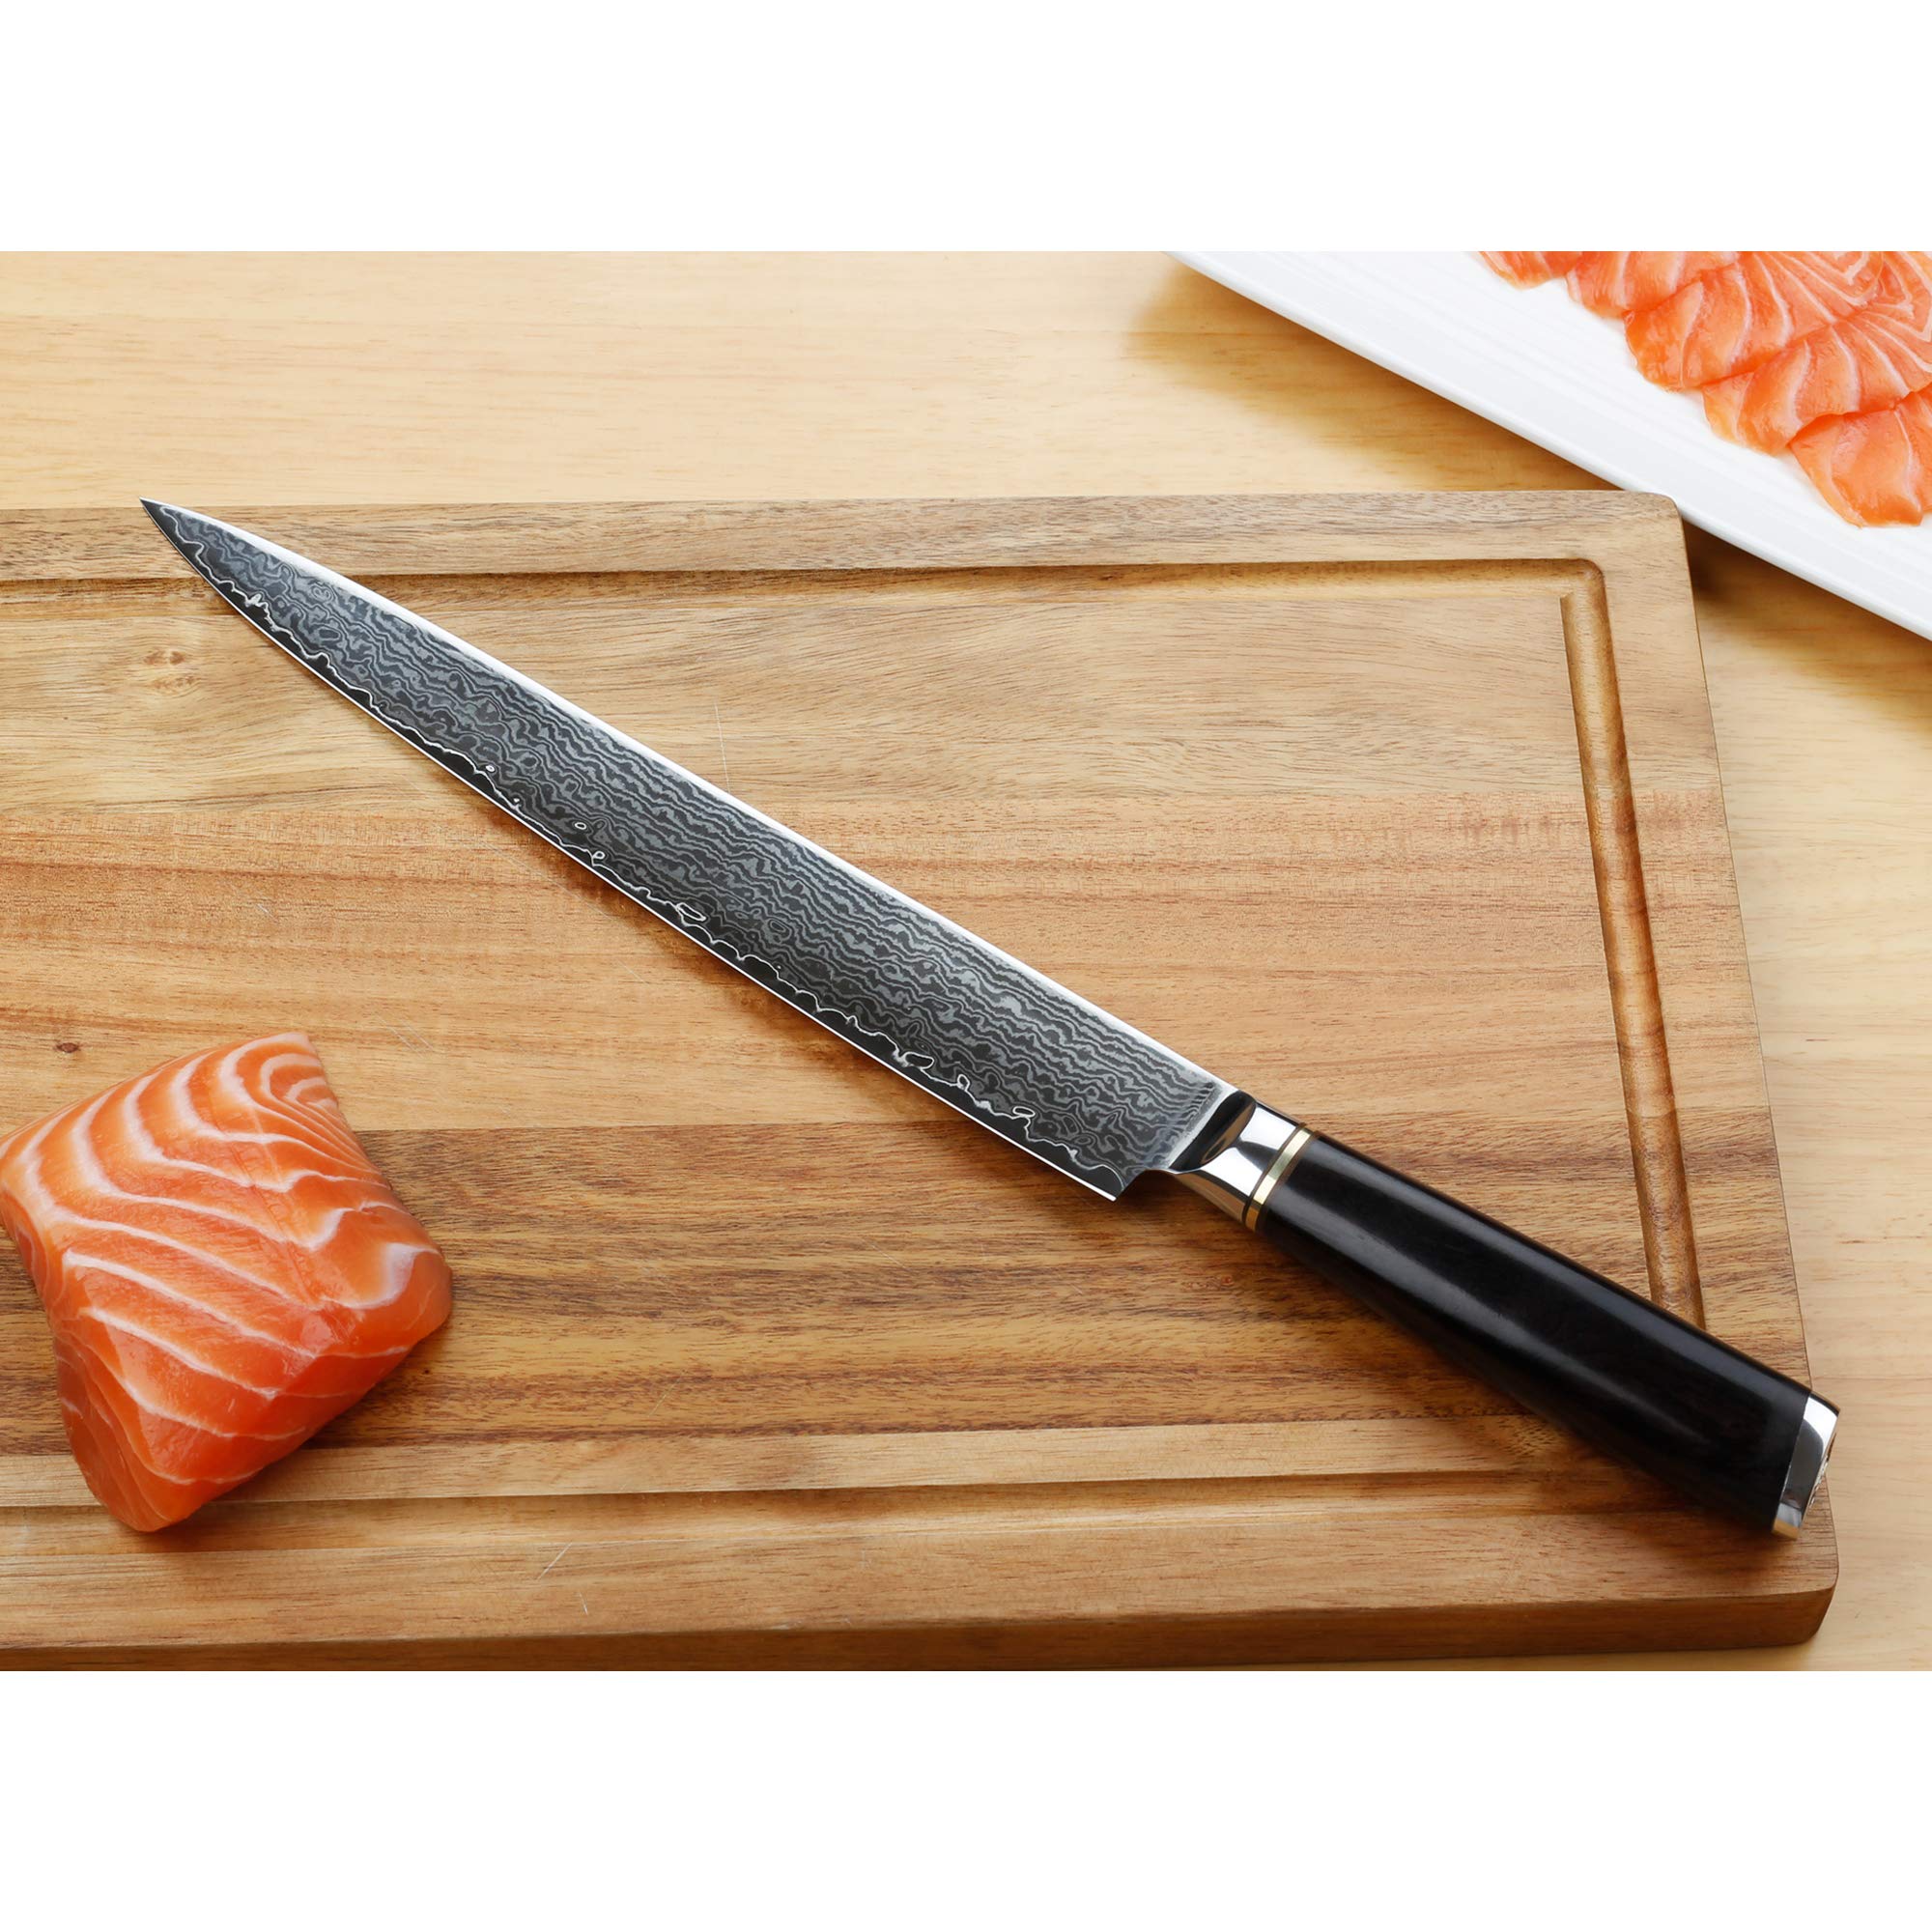 YOUSUNLONG Sashimi Knife 10 inch Fish Fillet Knife Yanagiba Slicer Sushi - Japanese Hammer Damascus Steel Blade - 254mm Right Handed Carving Knife - Natural Walnut Wood Sheath with Flannel Knife Bag